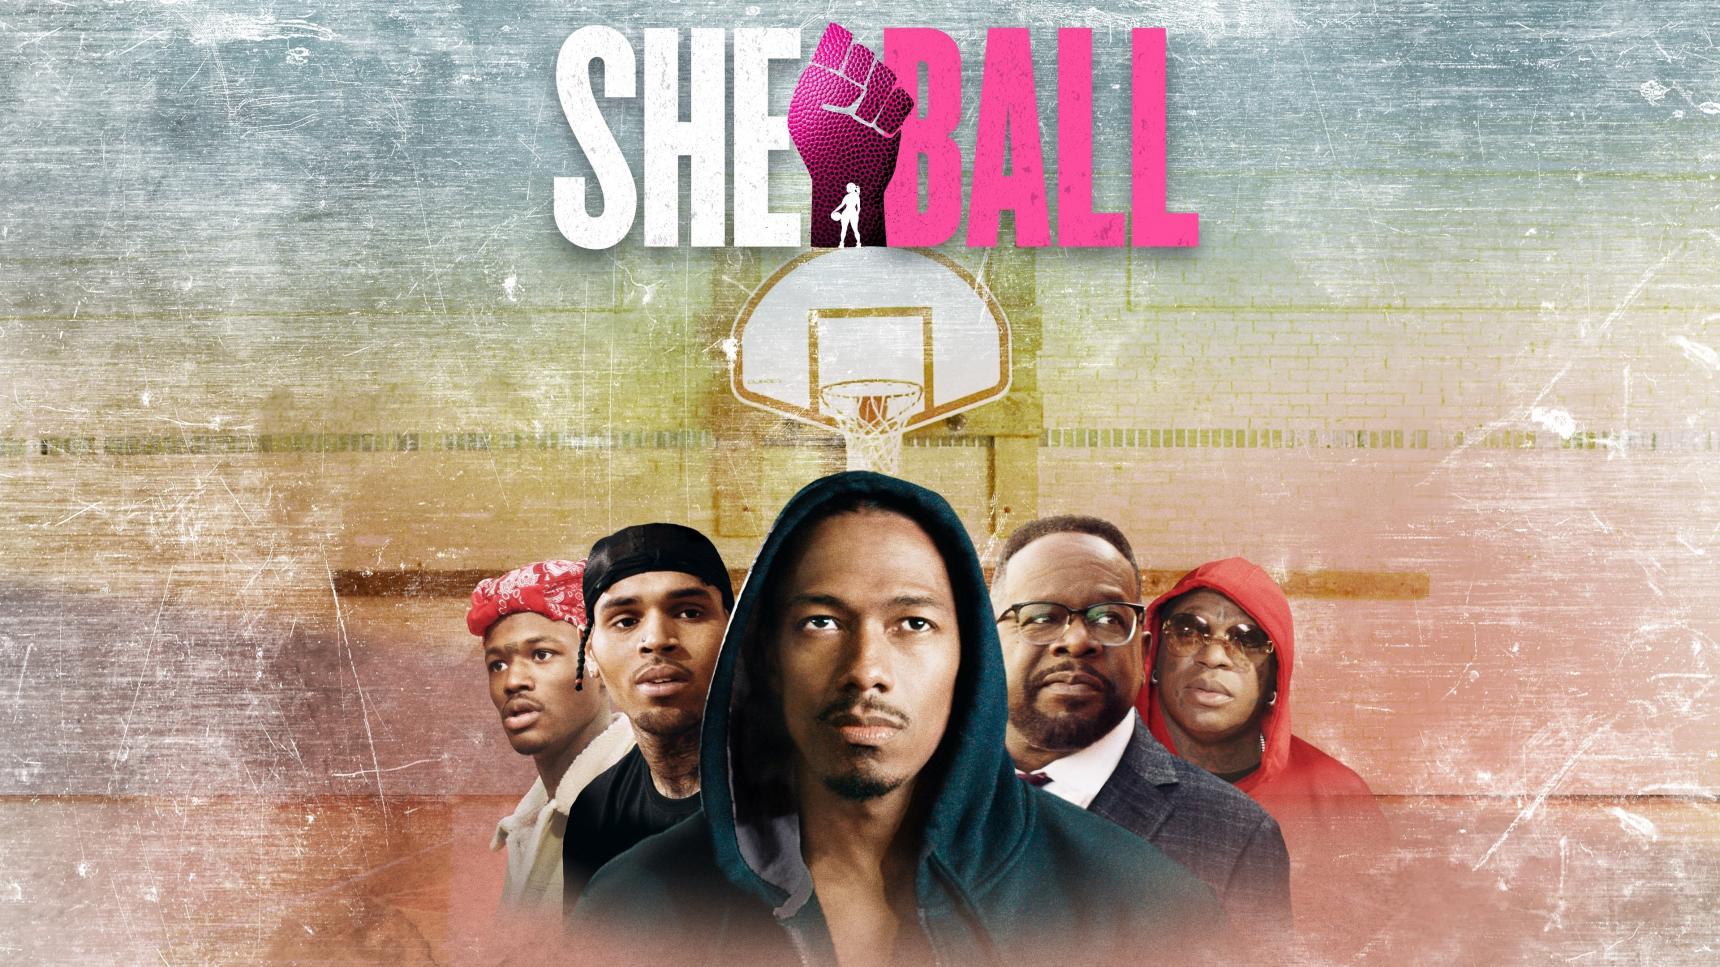 Fondo de pantalla de la película She Ball en Cliver.tv gratis